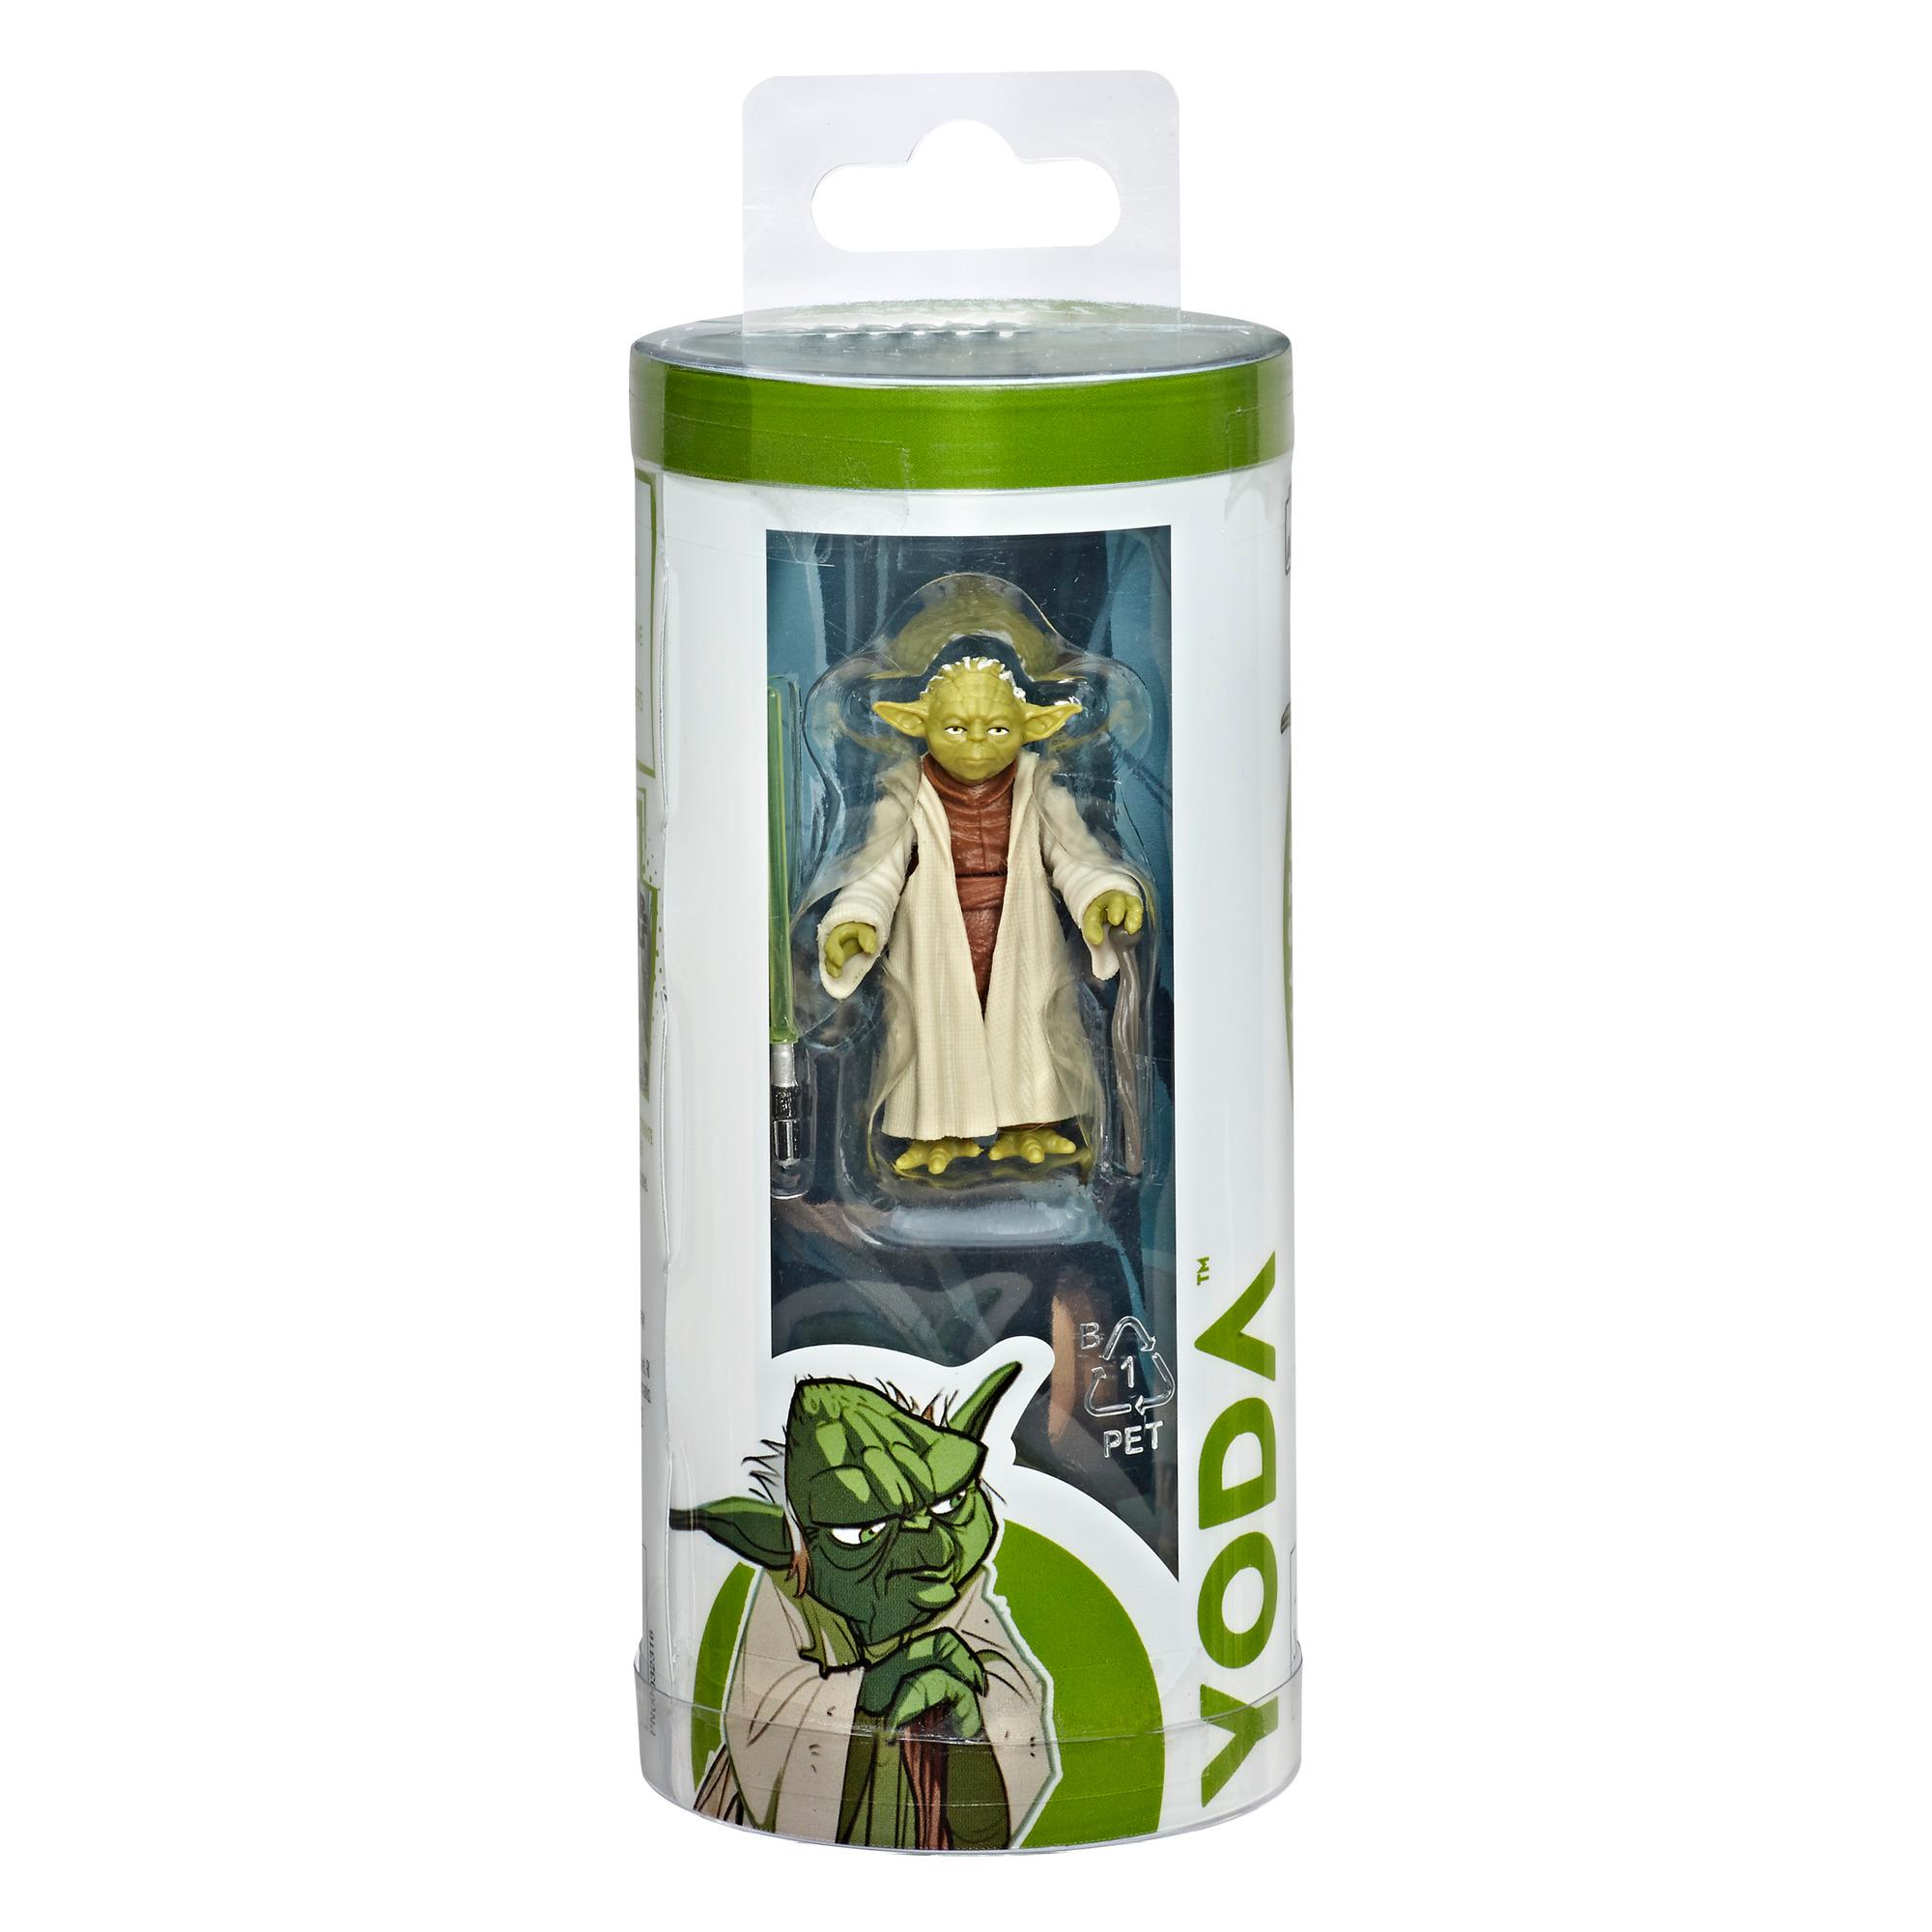 Star Wars Galaxy of Adventures Yoda Figure and Mini Comic